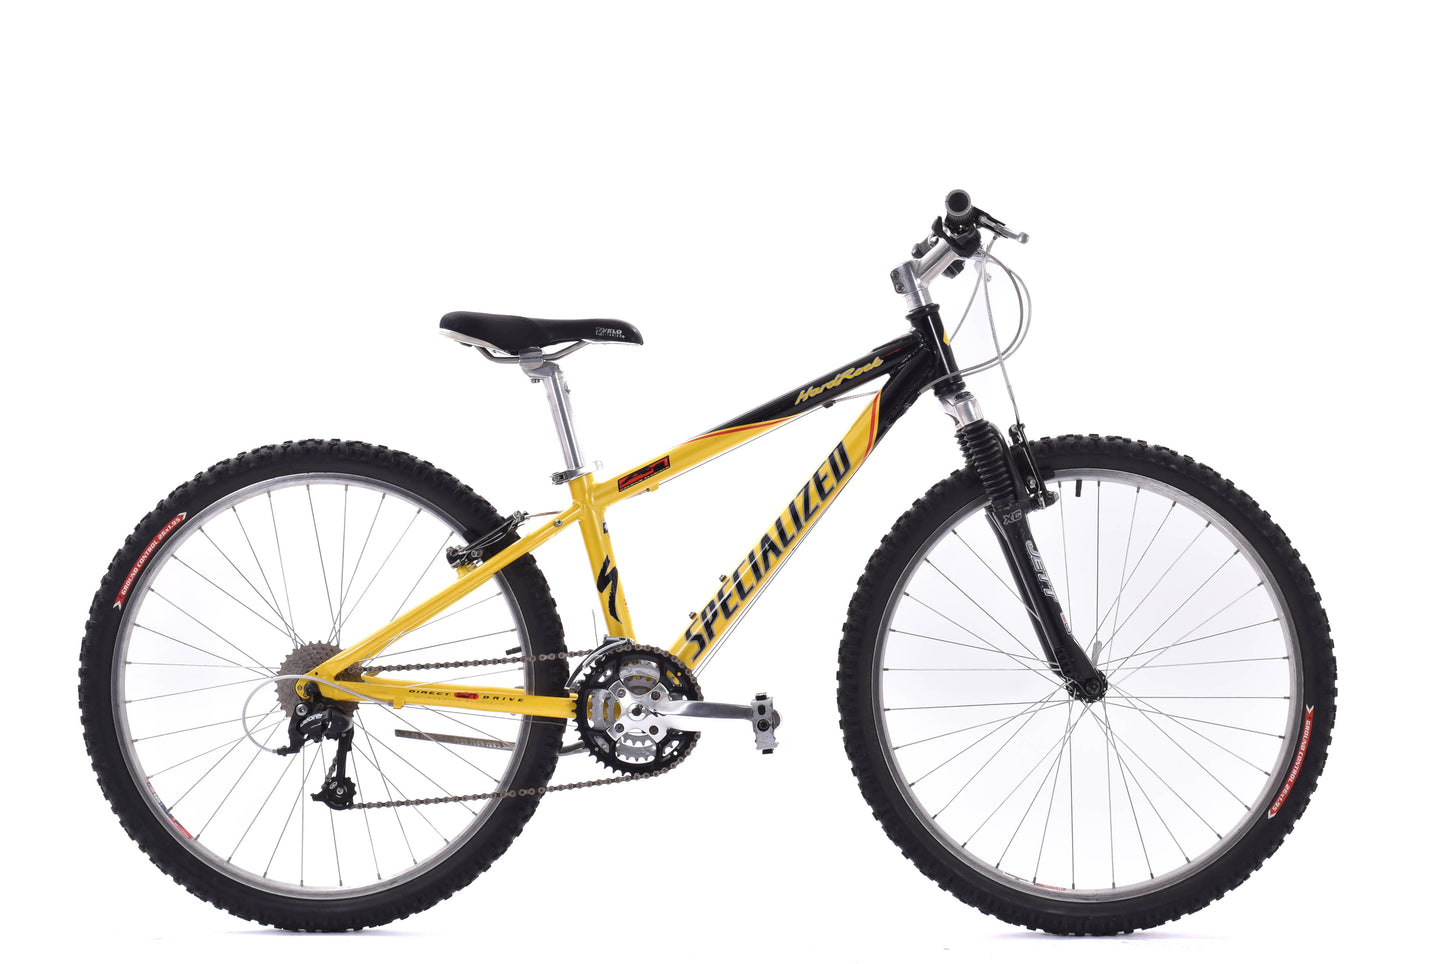 USED Specialized Hard Rock XS 13" Hardtail Mountain Bike Black/Yellow Aluminum 26" Wheels